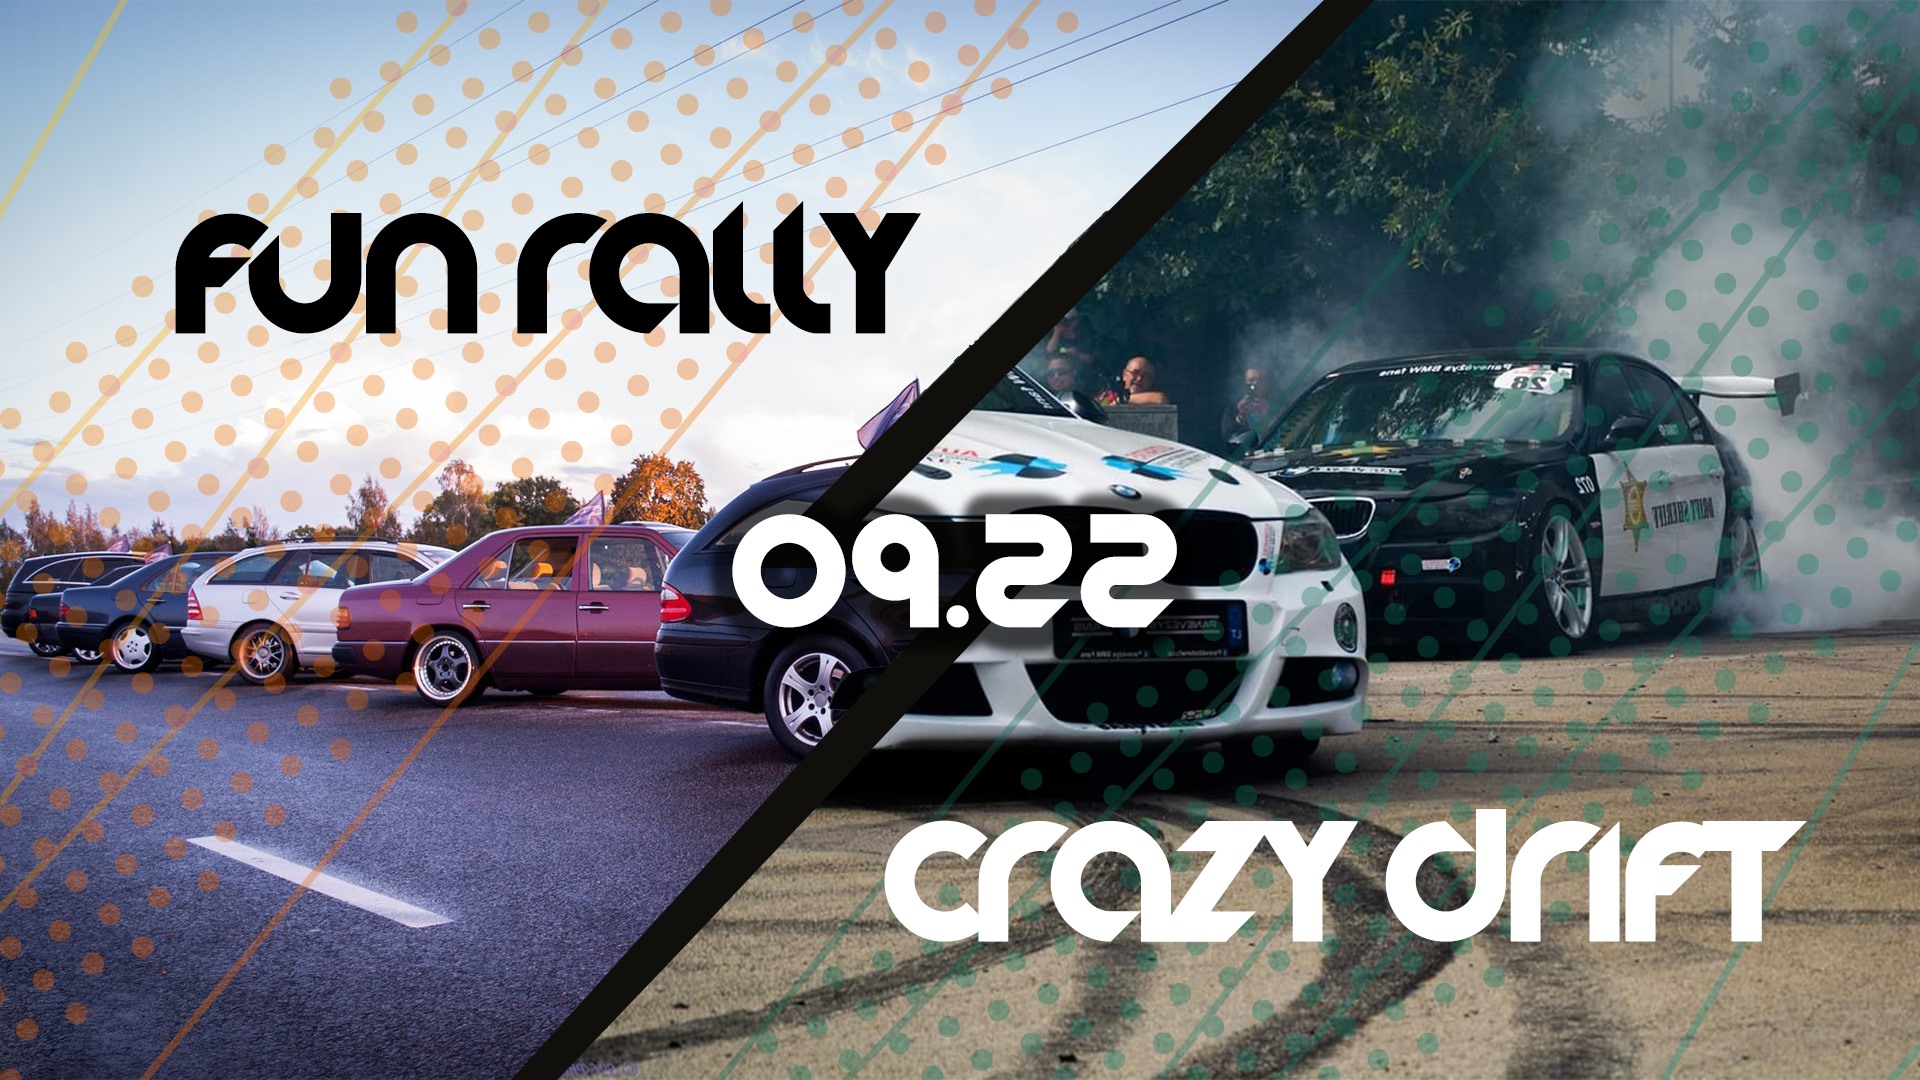 Fun rally & Crazy drift